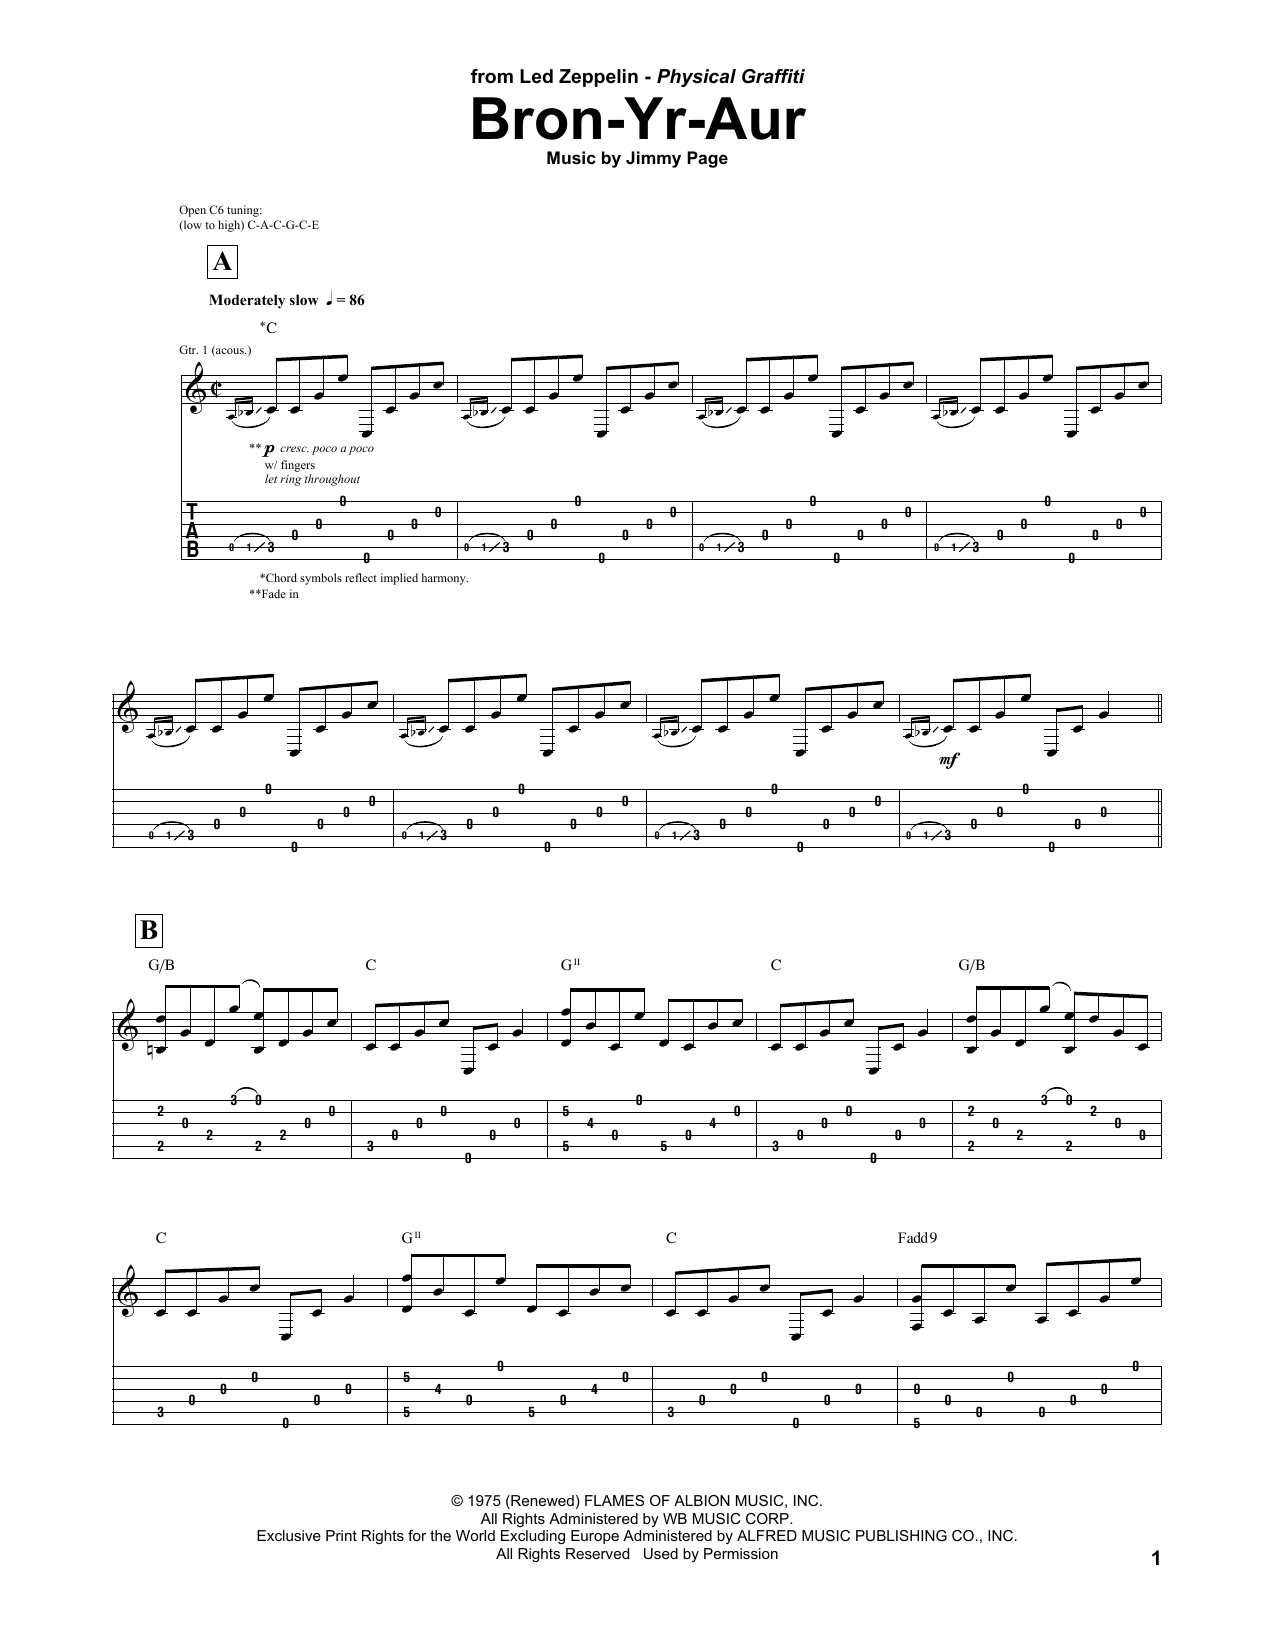 Led Zeppelin "Bron-Yr-Aur" Sheet Music Notes, | Rock Score Guitar Tab Download Printable. SKU: 159585